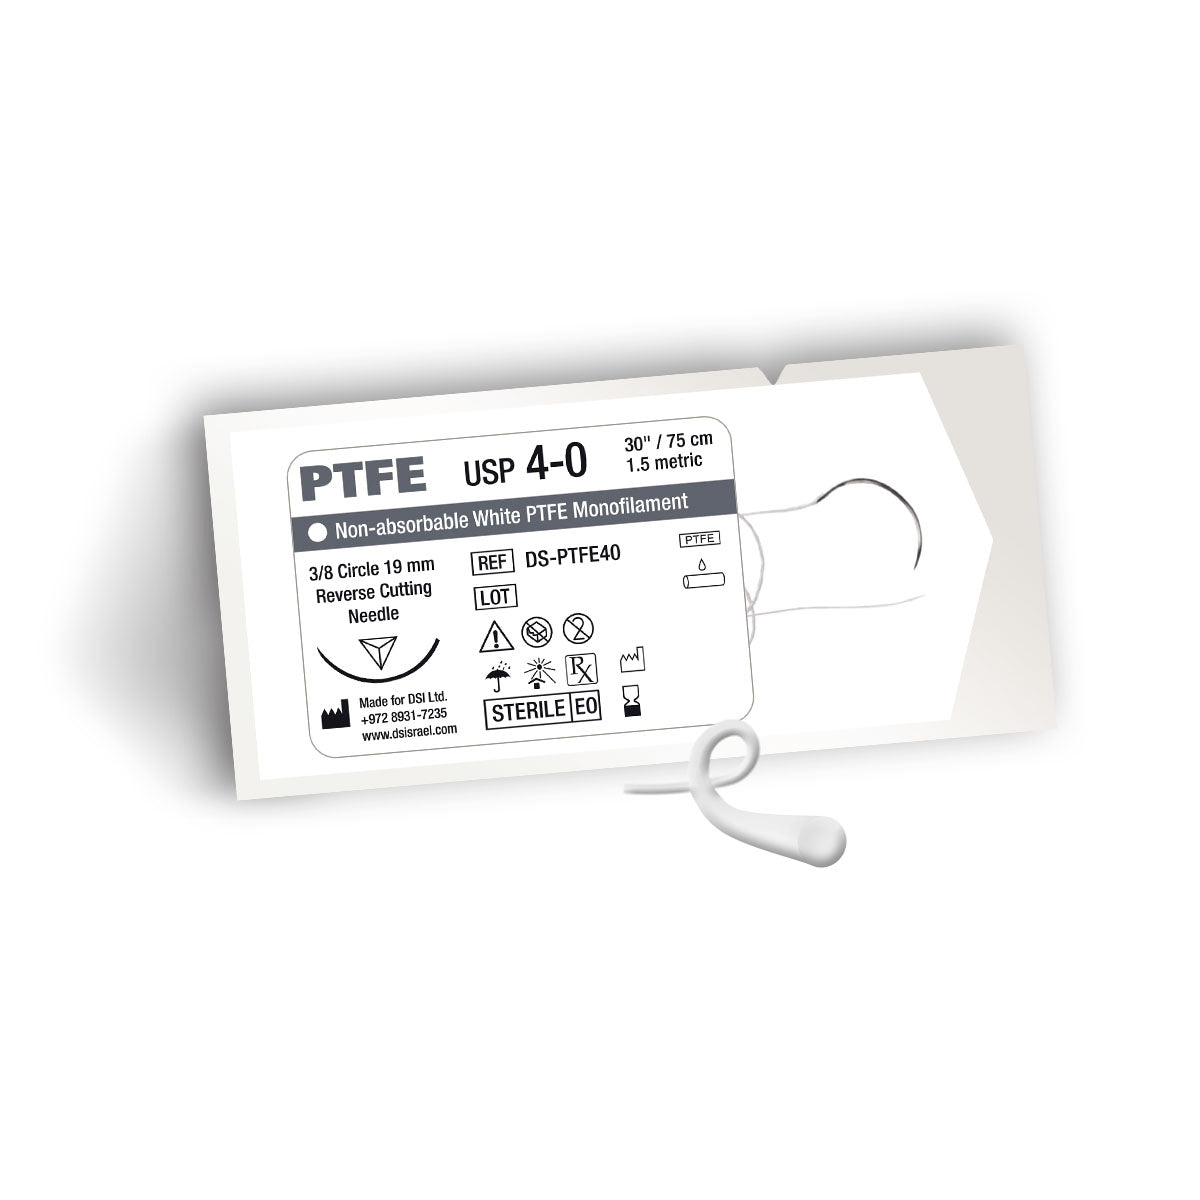 DSI PTFE Non-Resorbable (Teflon®) Surgical Sutures 75cm 12pcs Pack